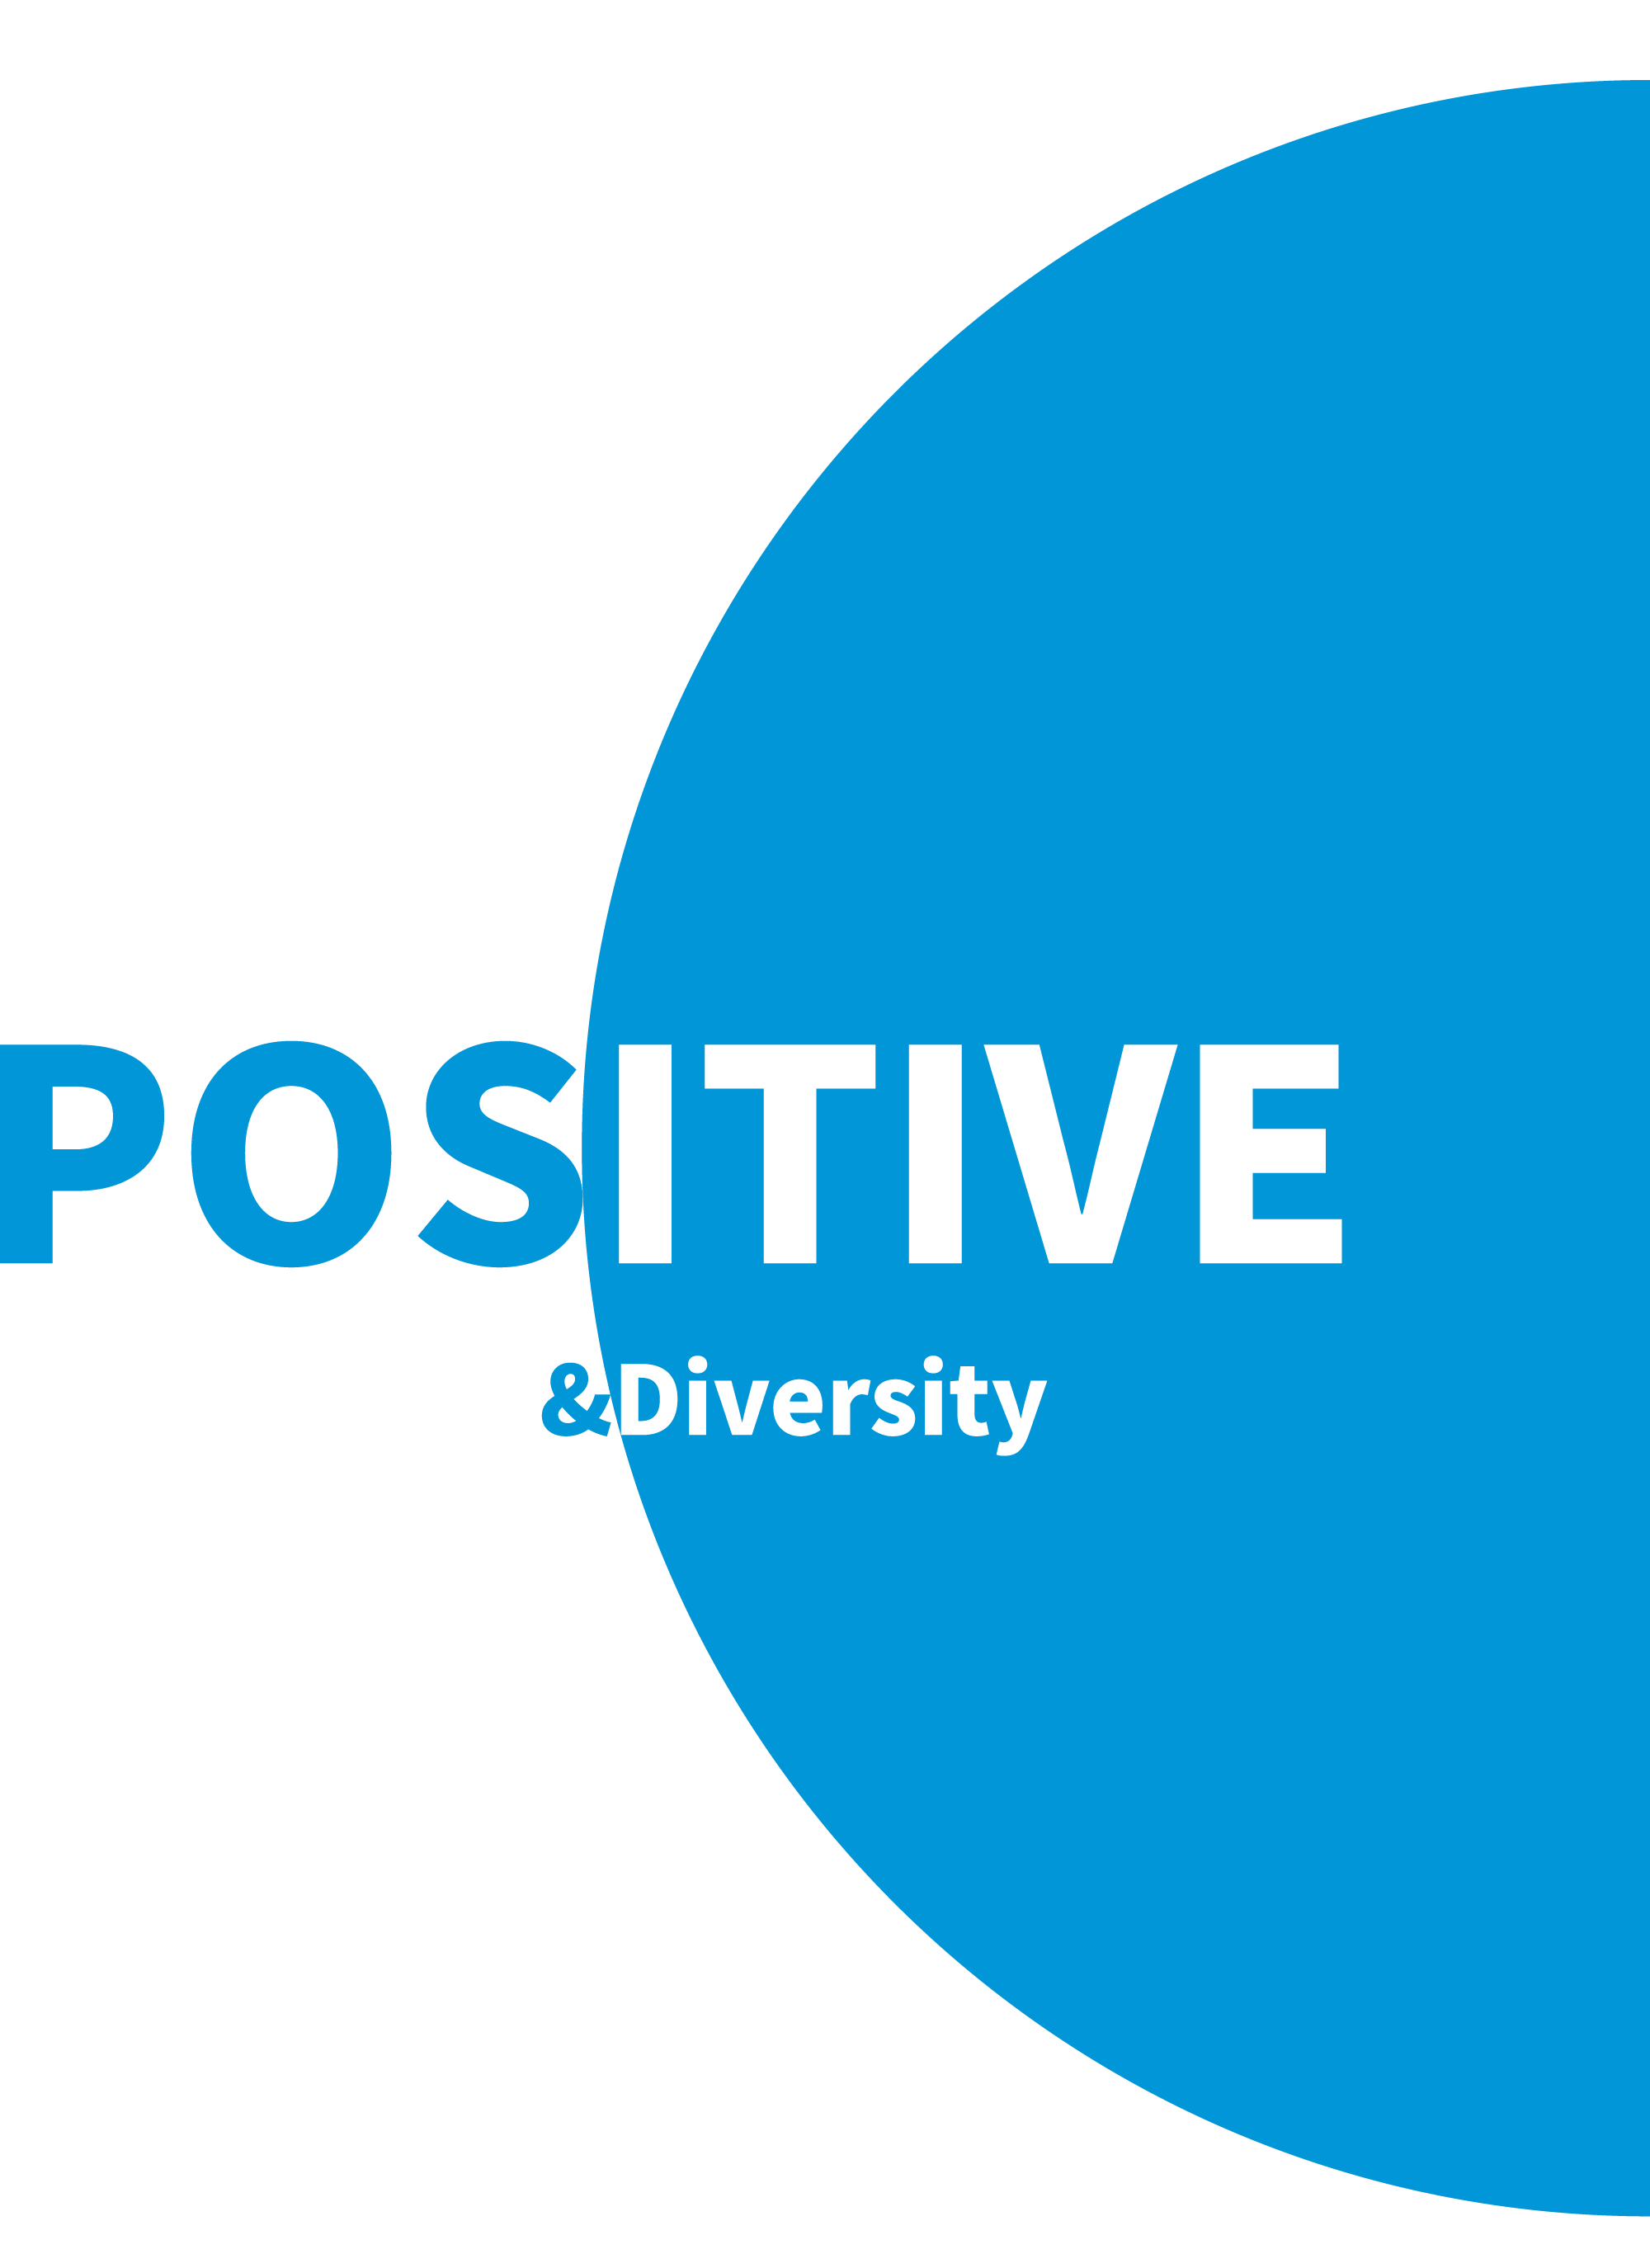 POSITIVE & Diversity